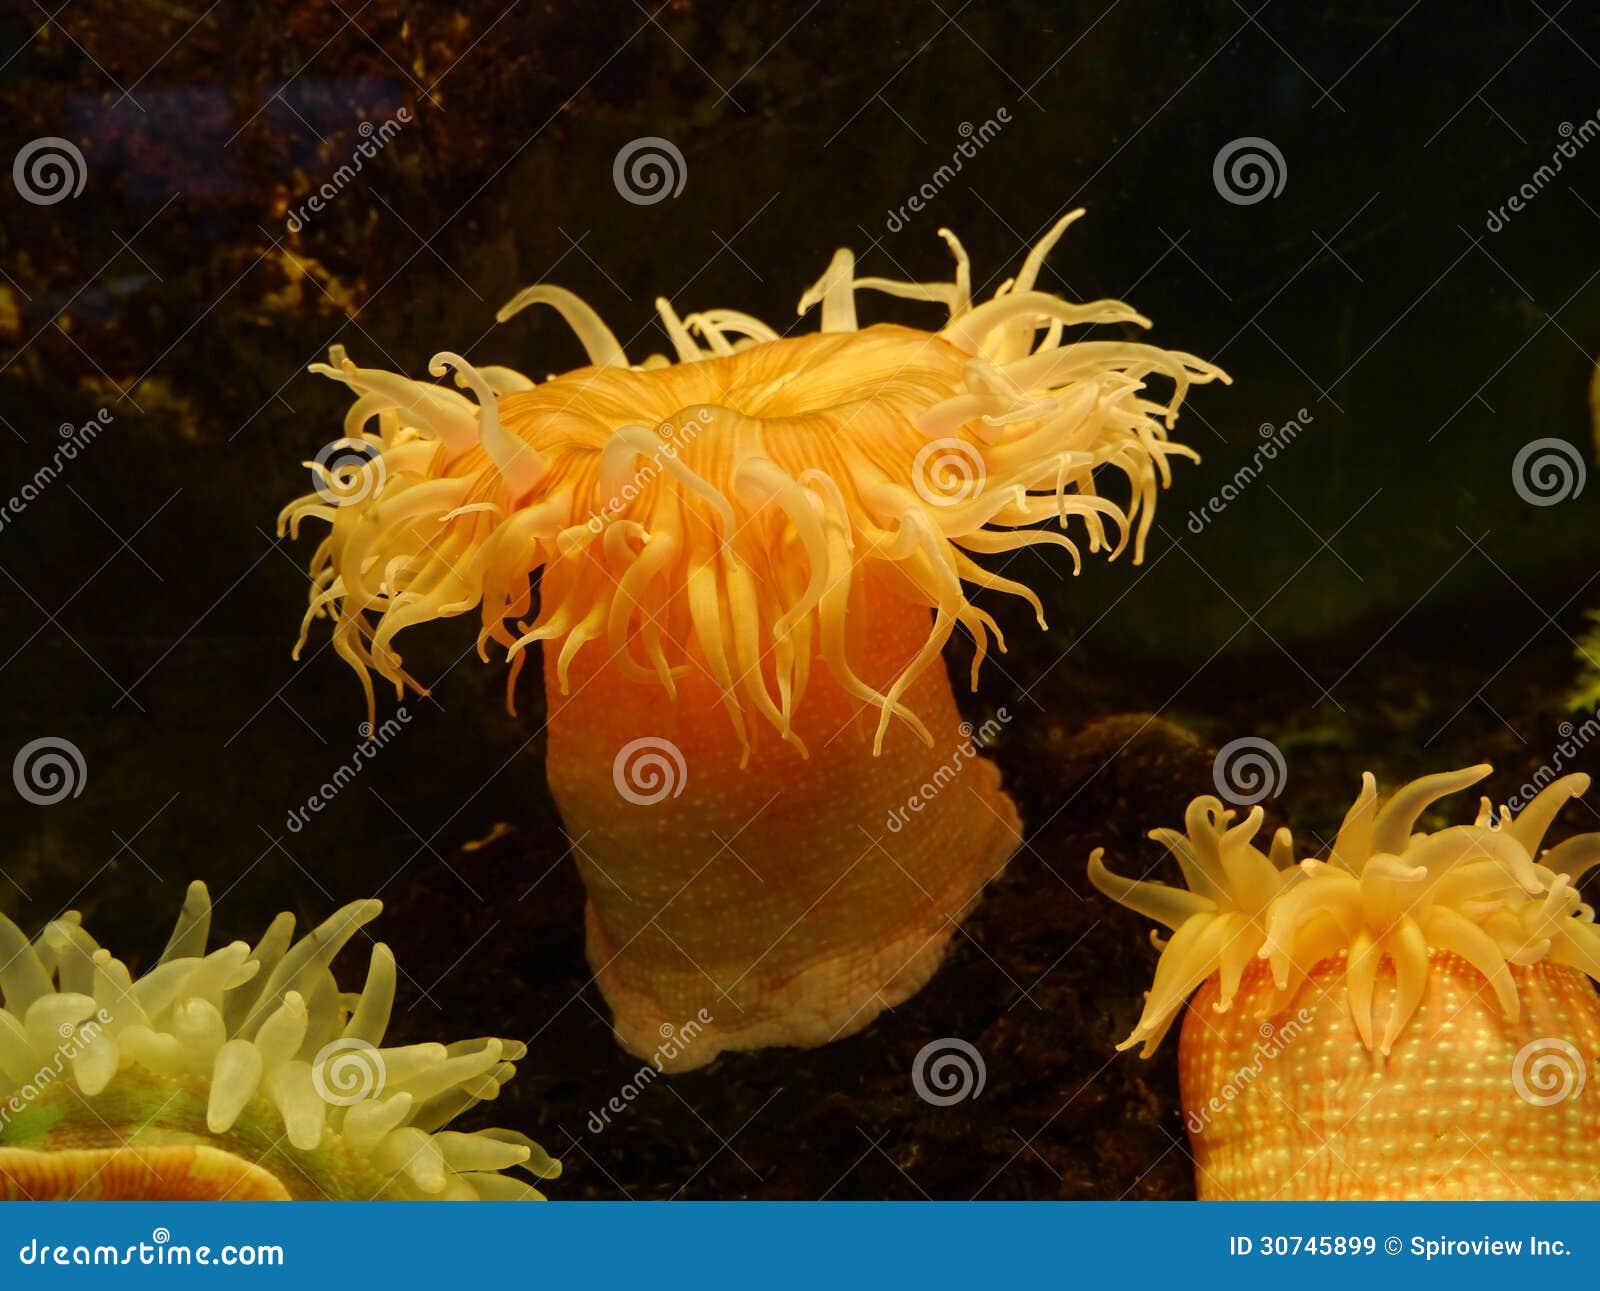 Sea anemone stock image. Image of invertebrate, flower - 30745899